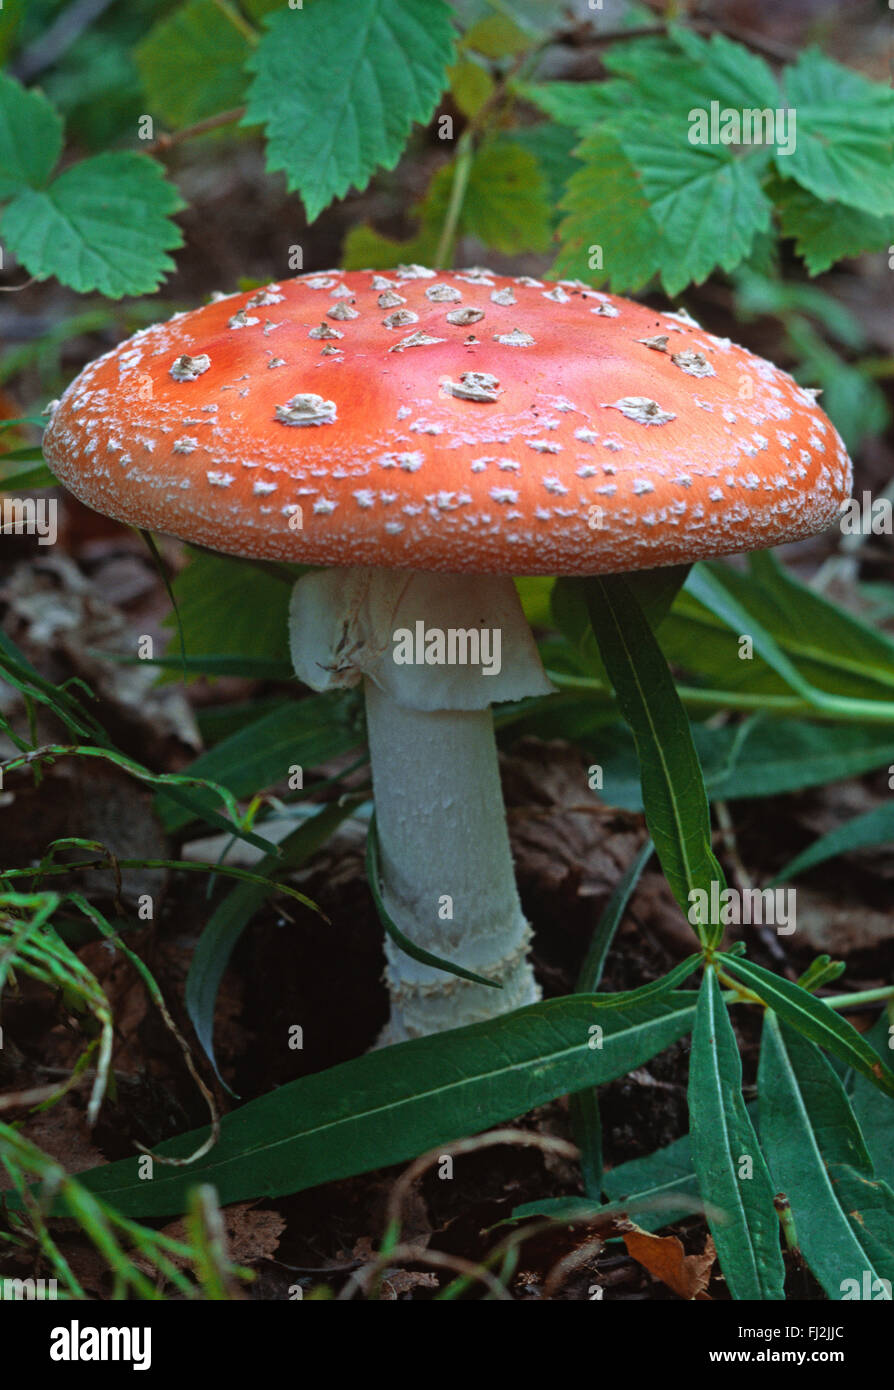 The AMINITA MASCARIA (Agalychnis callidryas) mushroom grows among the lush rainforest undergrowth - KENAI PENINSULA, ALASKA Stock Photo